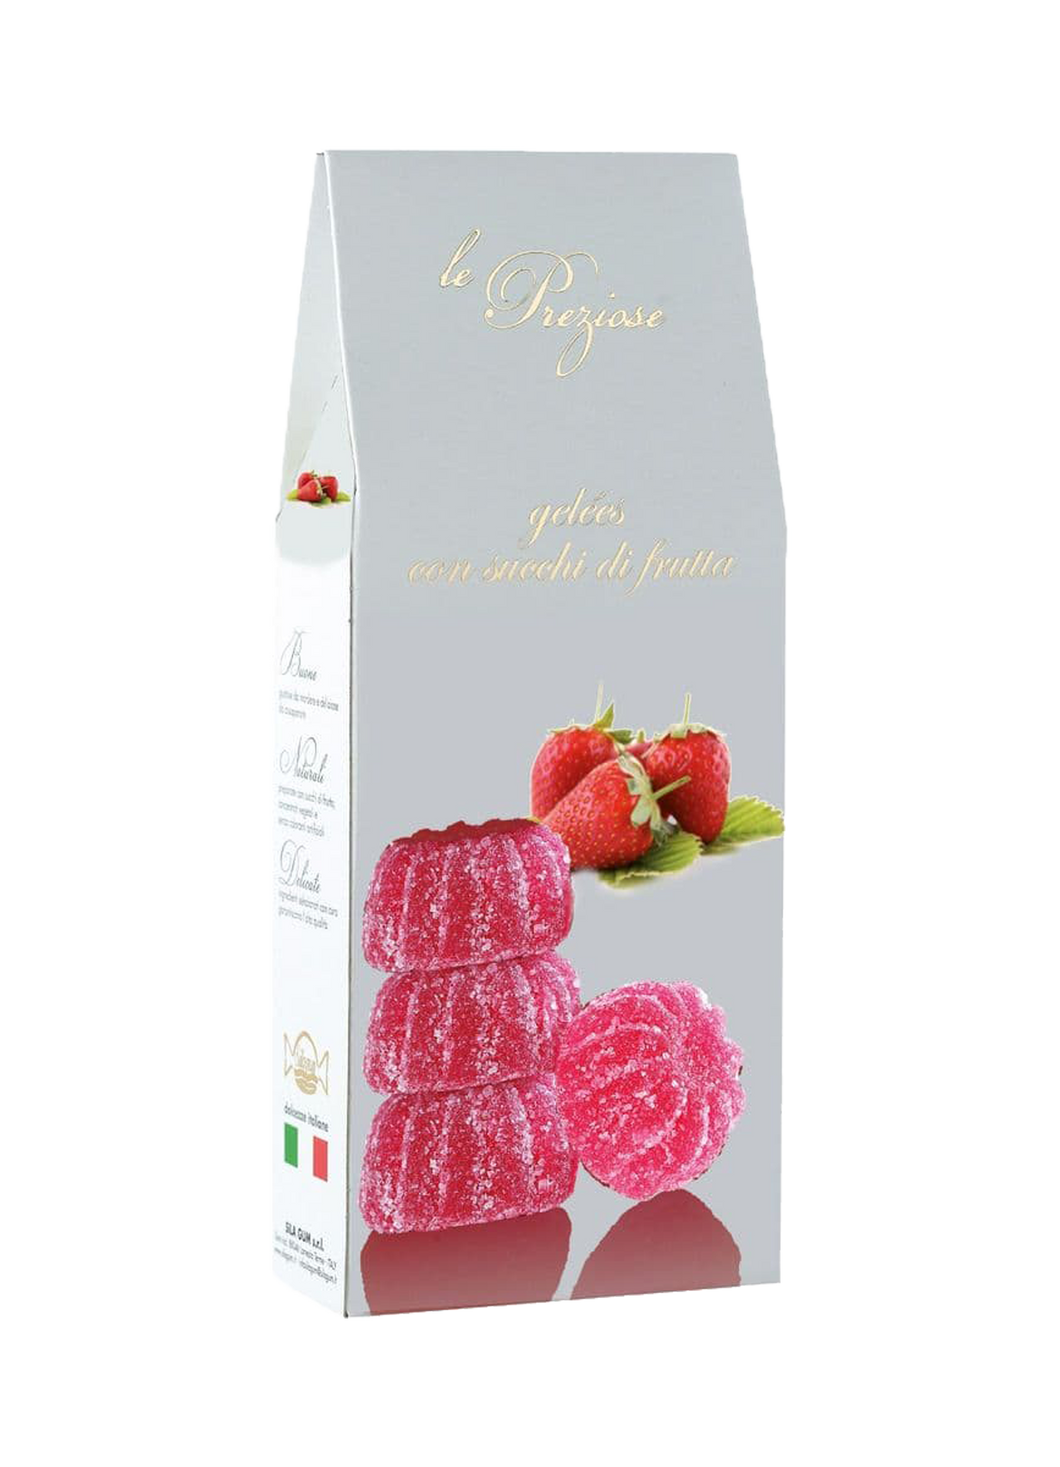 Le Preziose Jellies with Strawberry Juice 200g